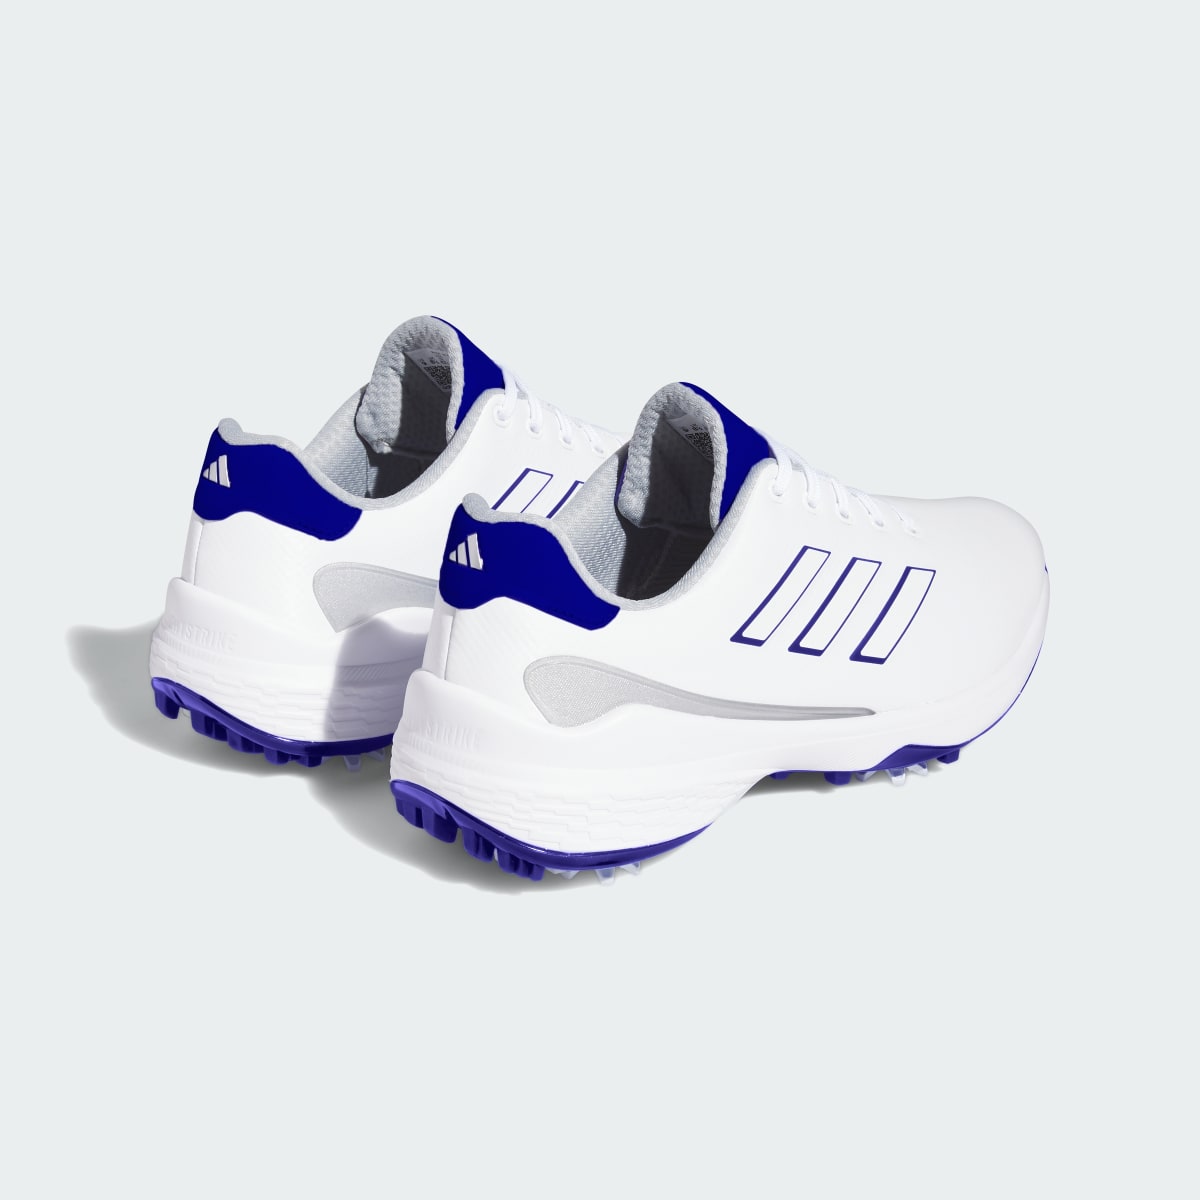 Adidas ZG23 Wide Golf Shoes. 6